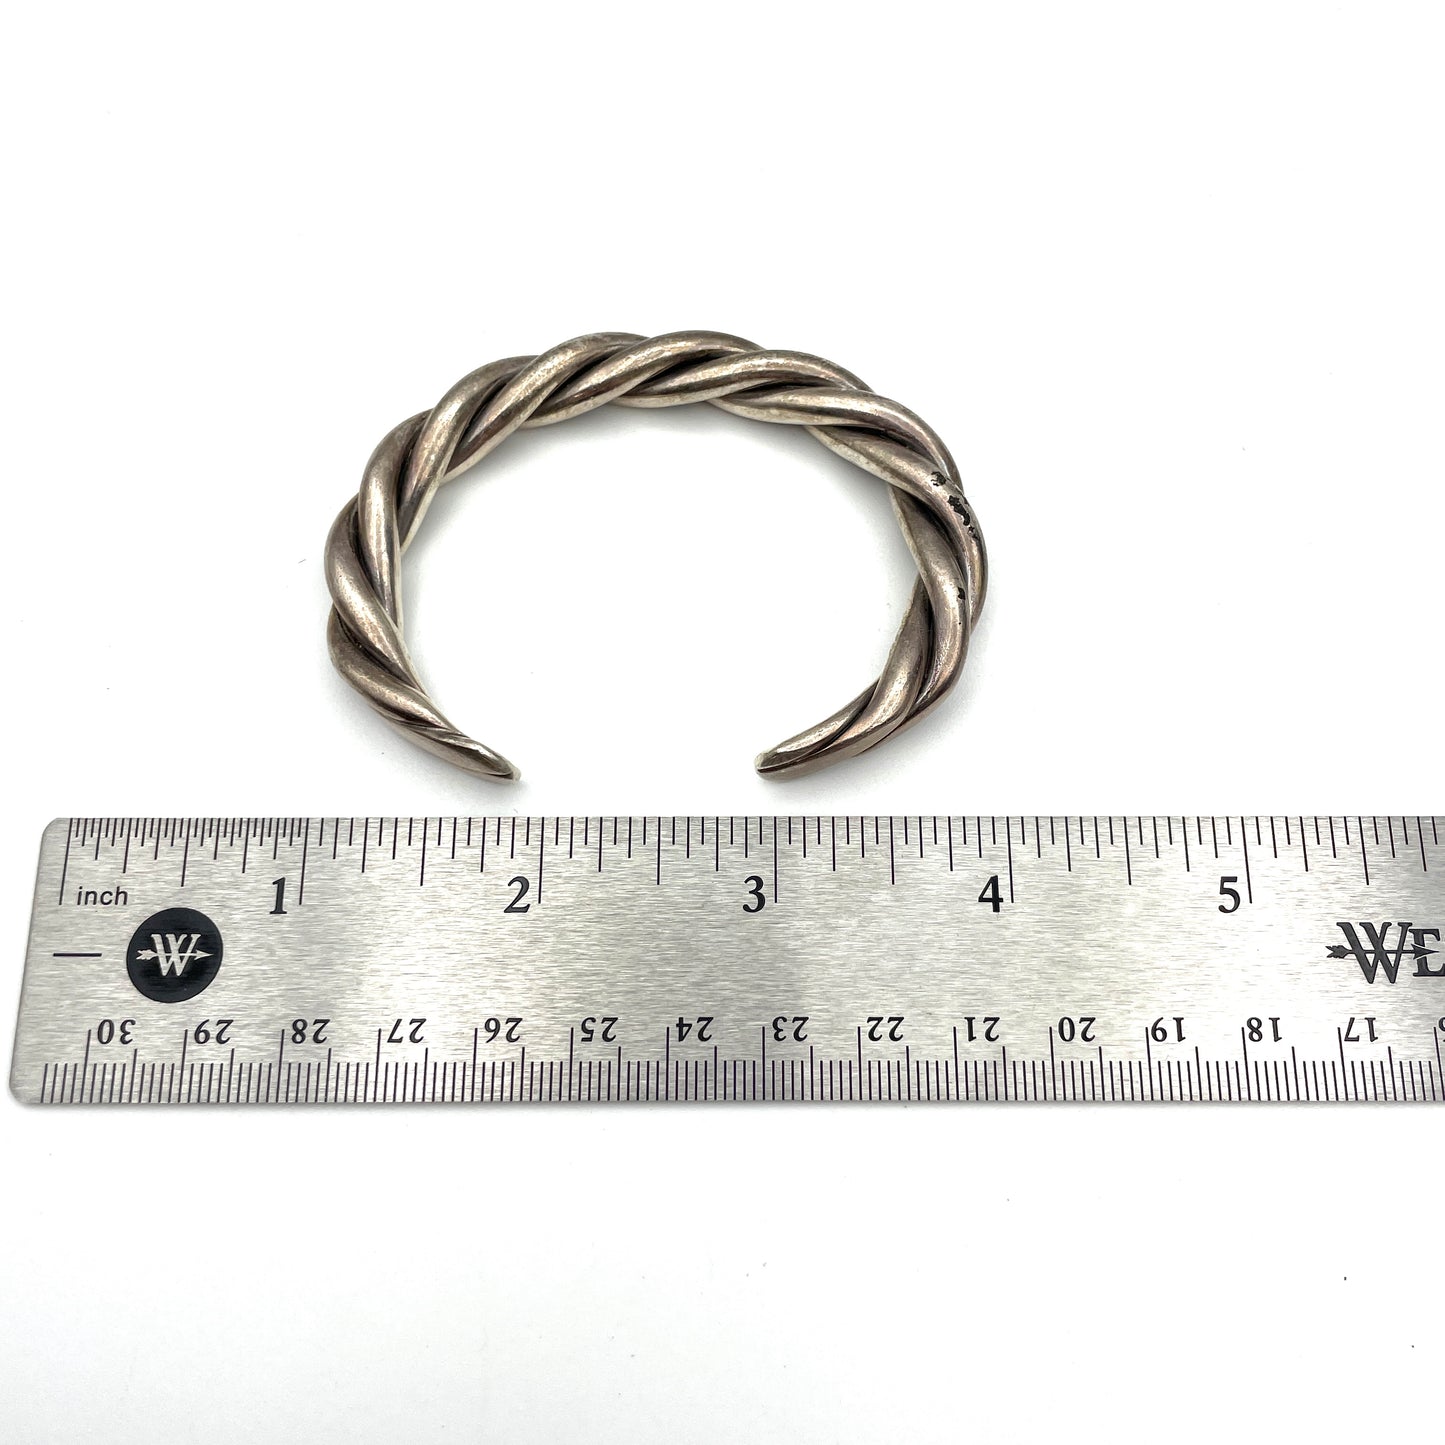 Vintage Solid Sterling Silver Braided Cuff Bracelet